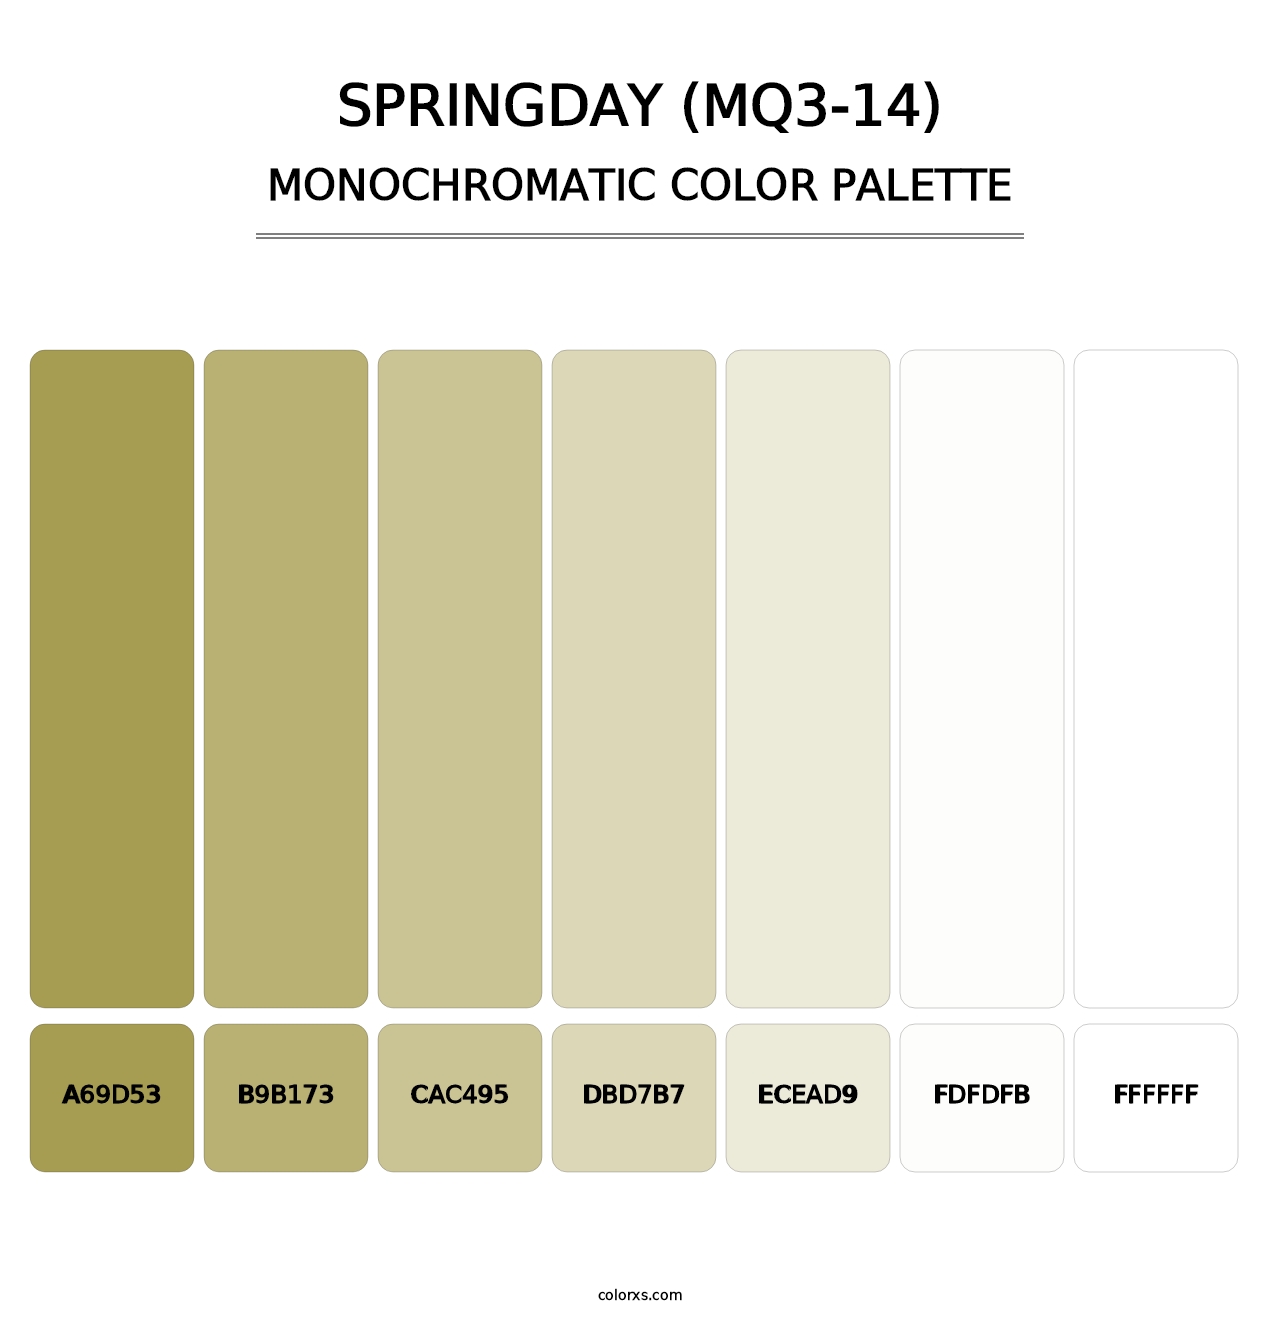 Springday (MQ3-14) - Monochromatic Color Palette